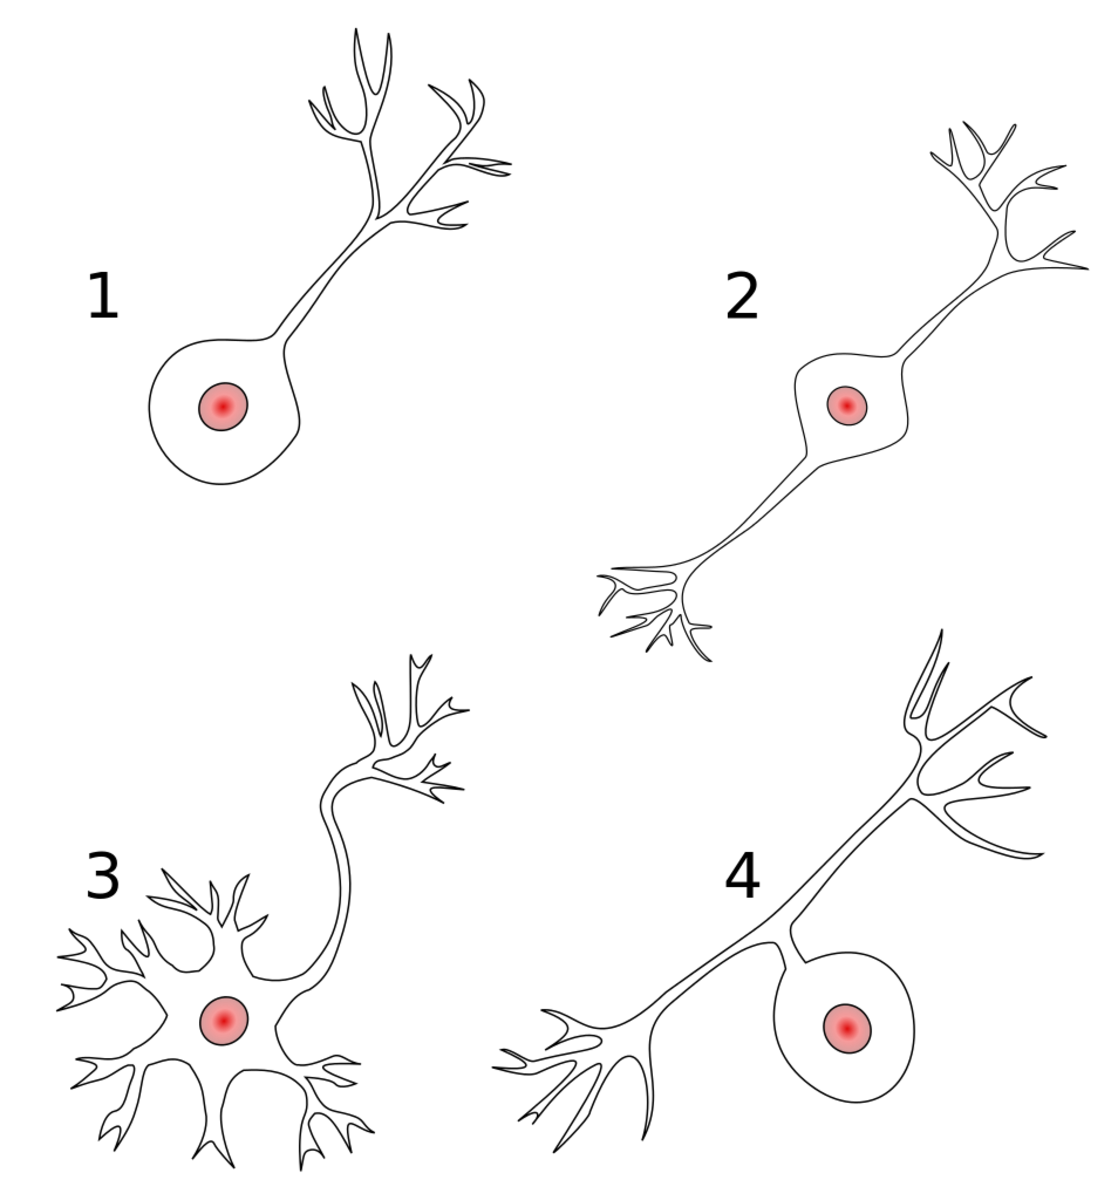 Types of neurons (1 = unipolar, 2 = bipolar. 3 = multipolar, 4 = pseudounipolar)